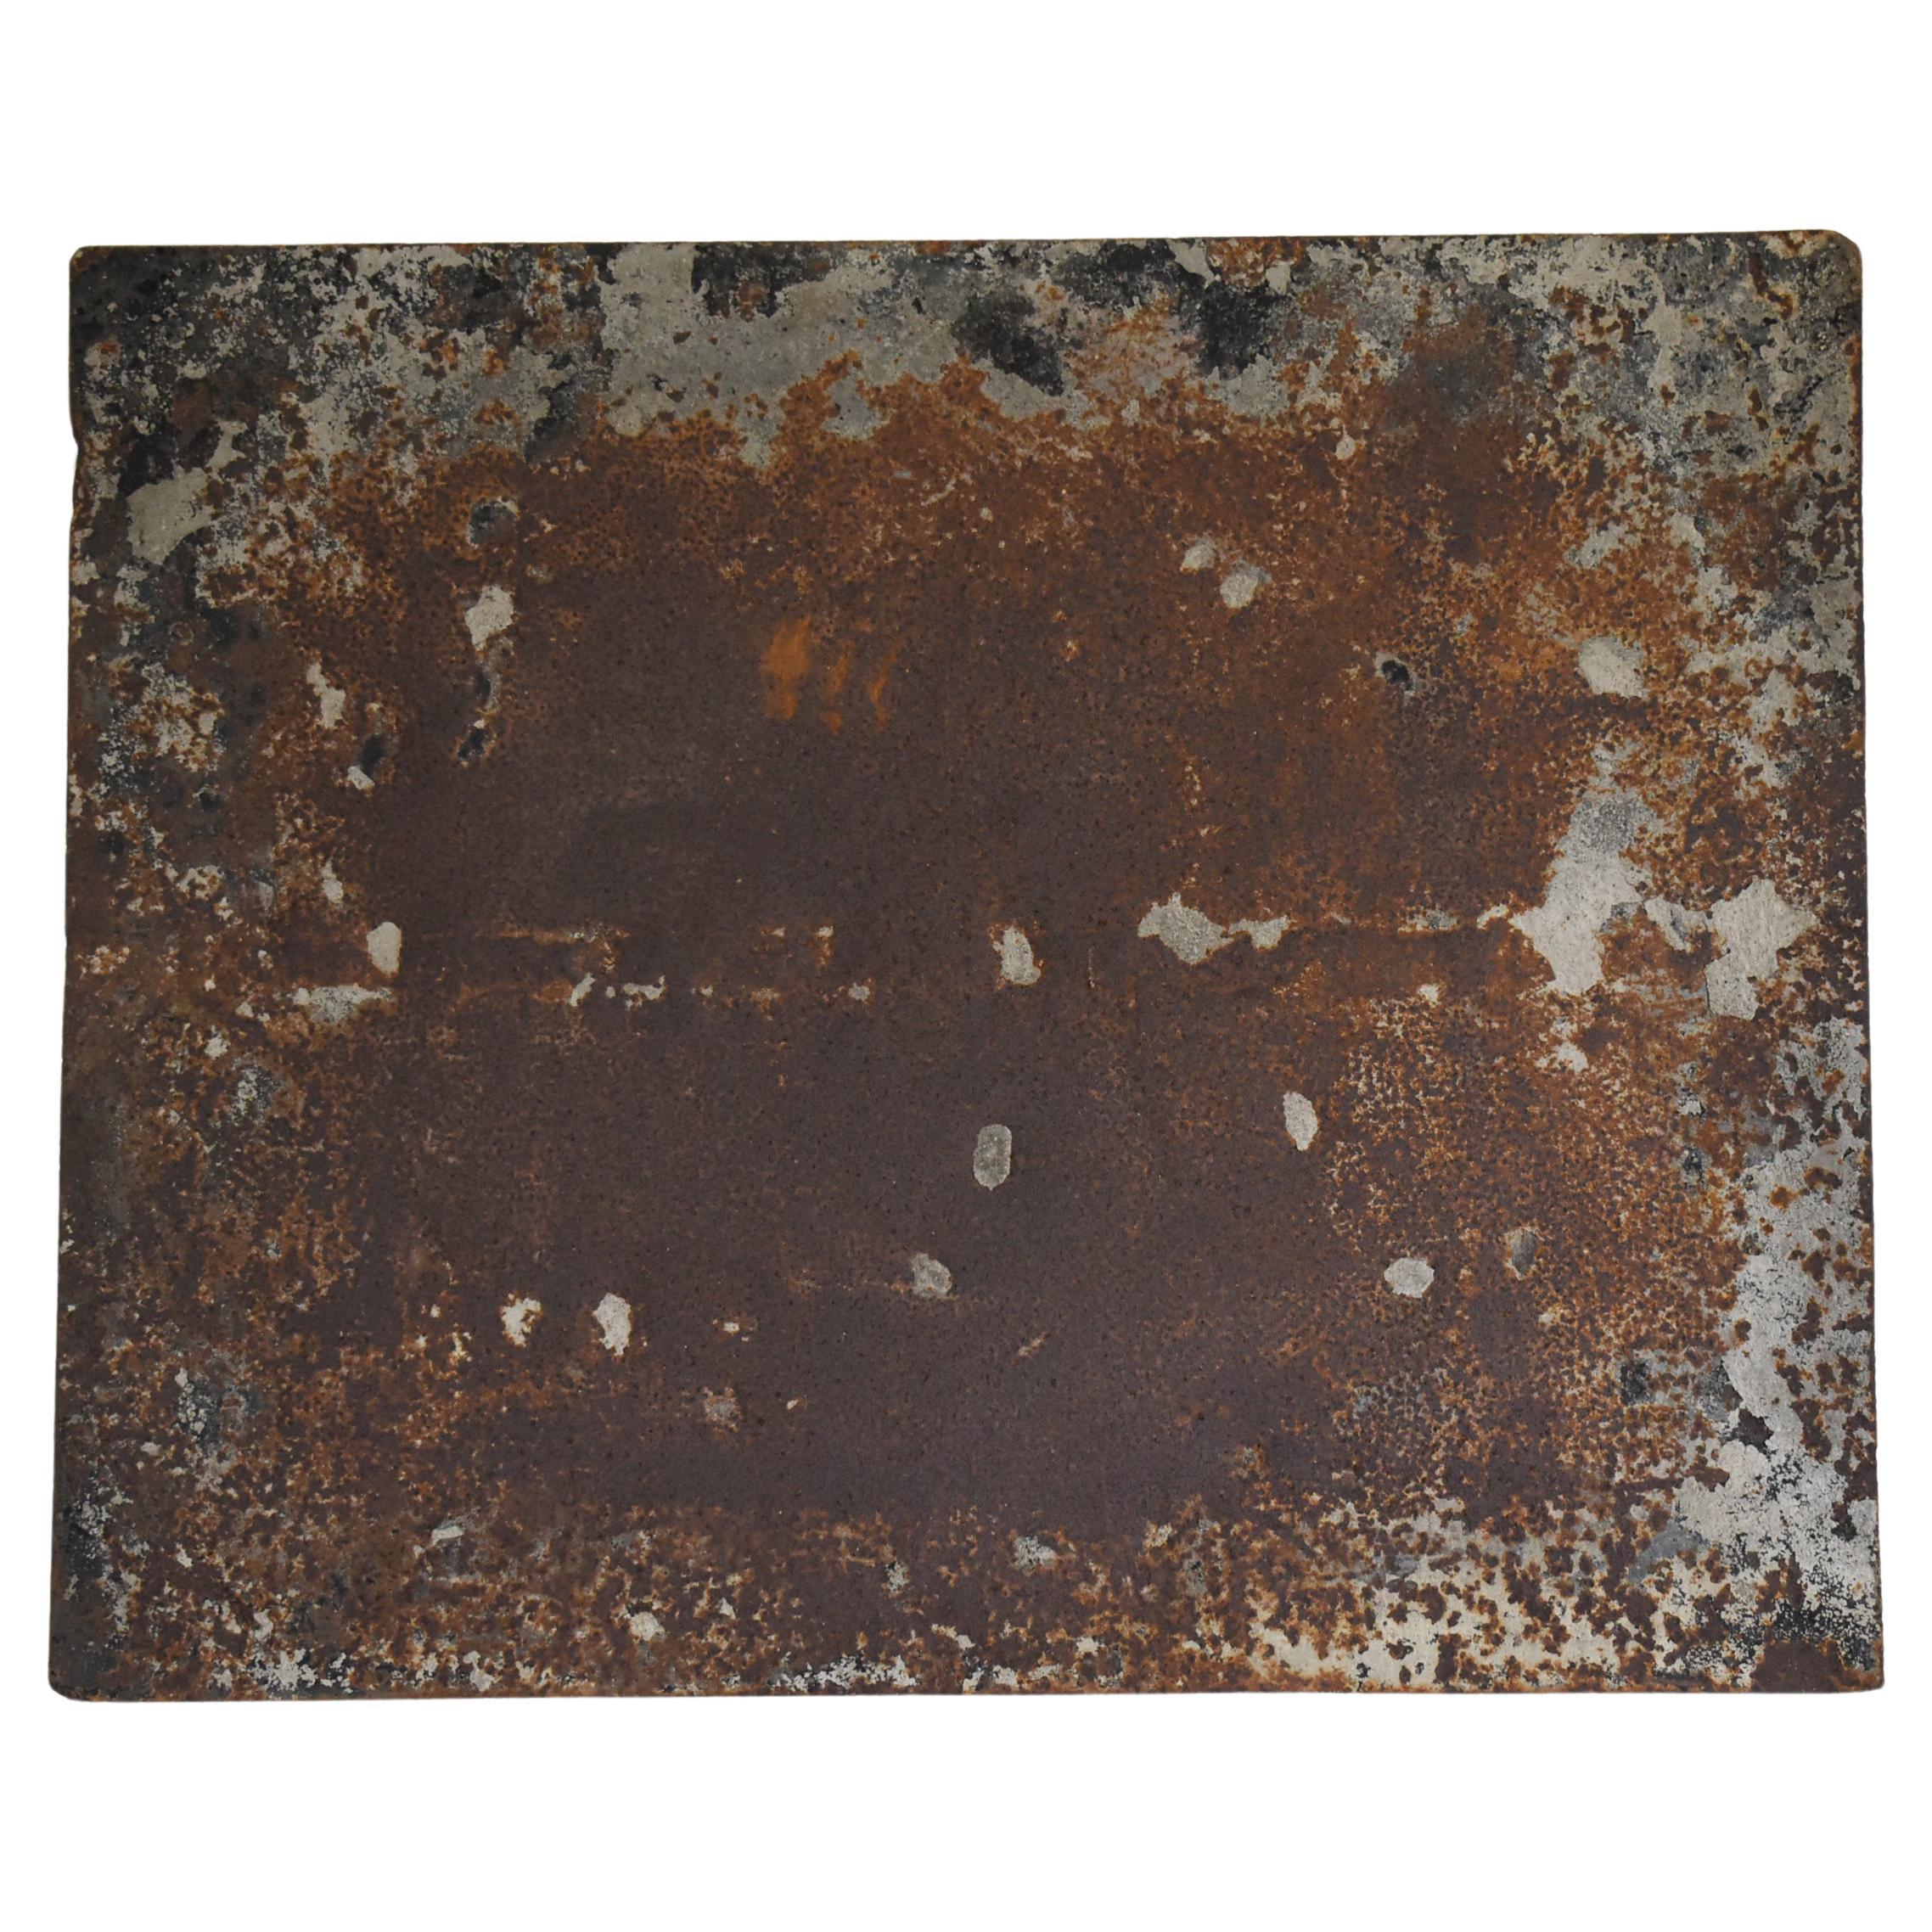 Japanese Antique Iron Plate 1920s-1940s / Abstract Art Wabi Sabi